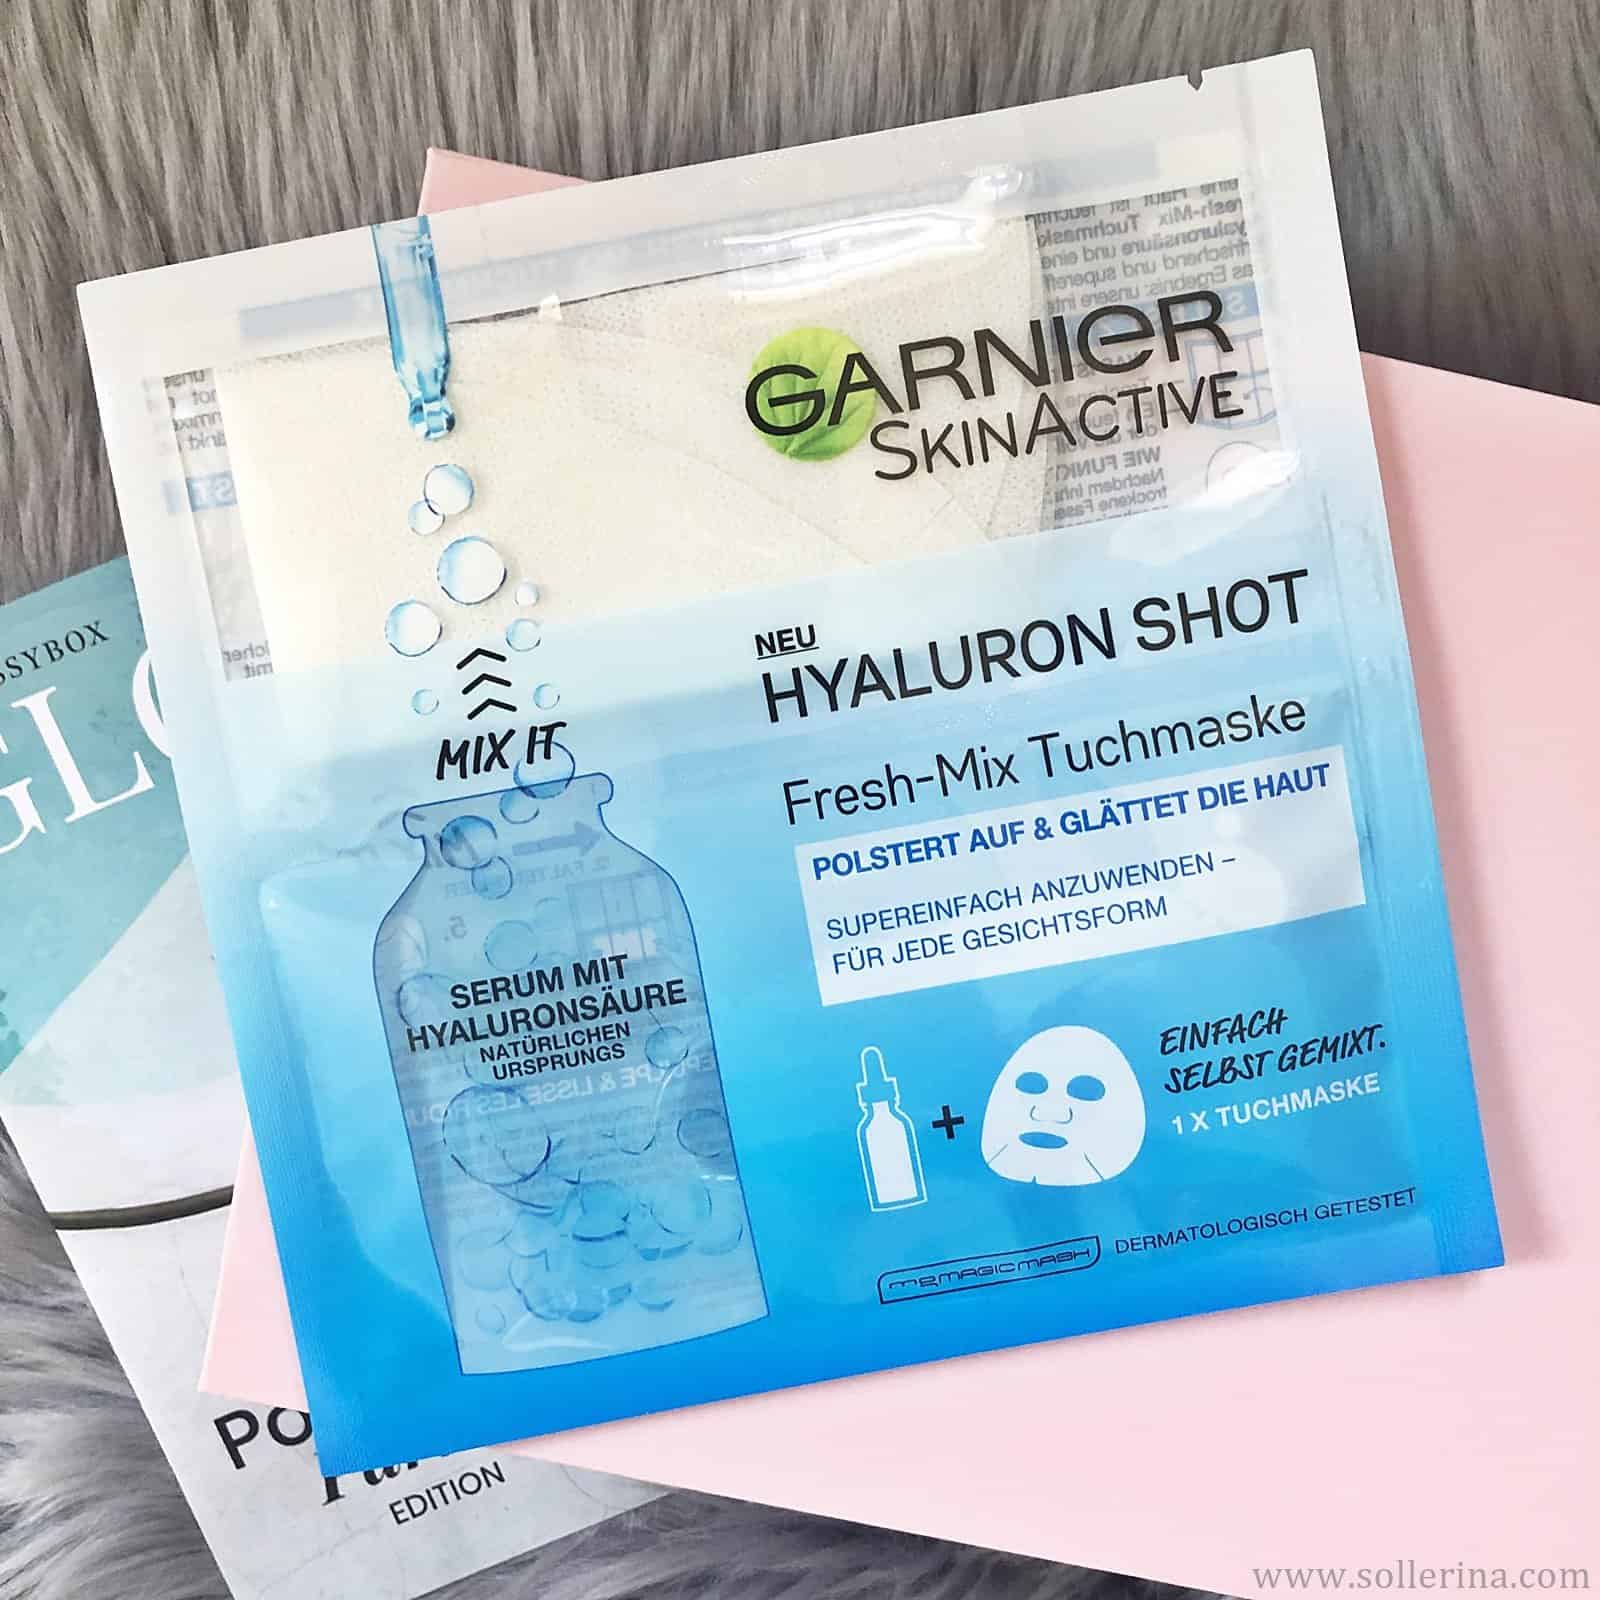 Garnier SkinActive – Hyaluron Shot Fresh-Mix Tuchmaske